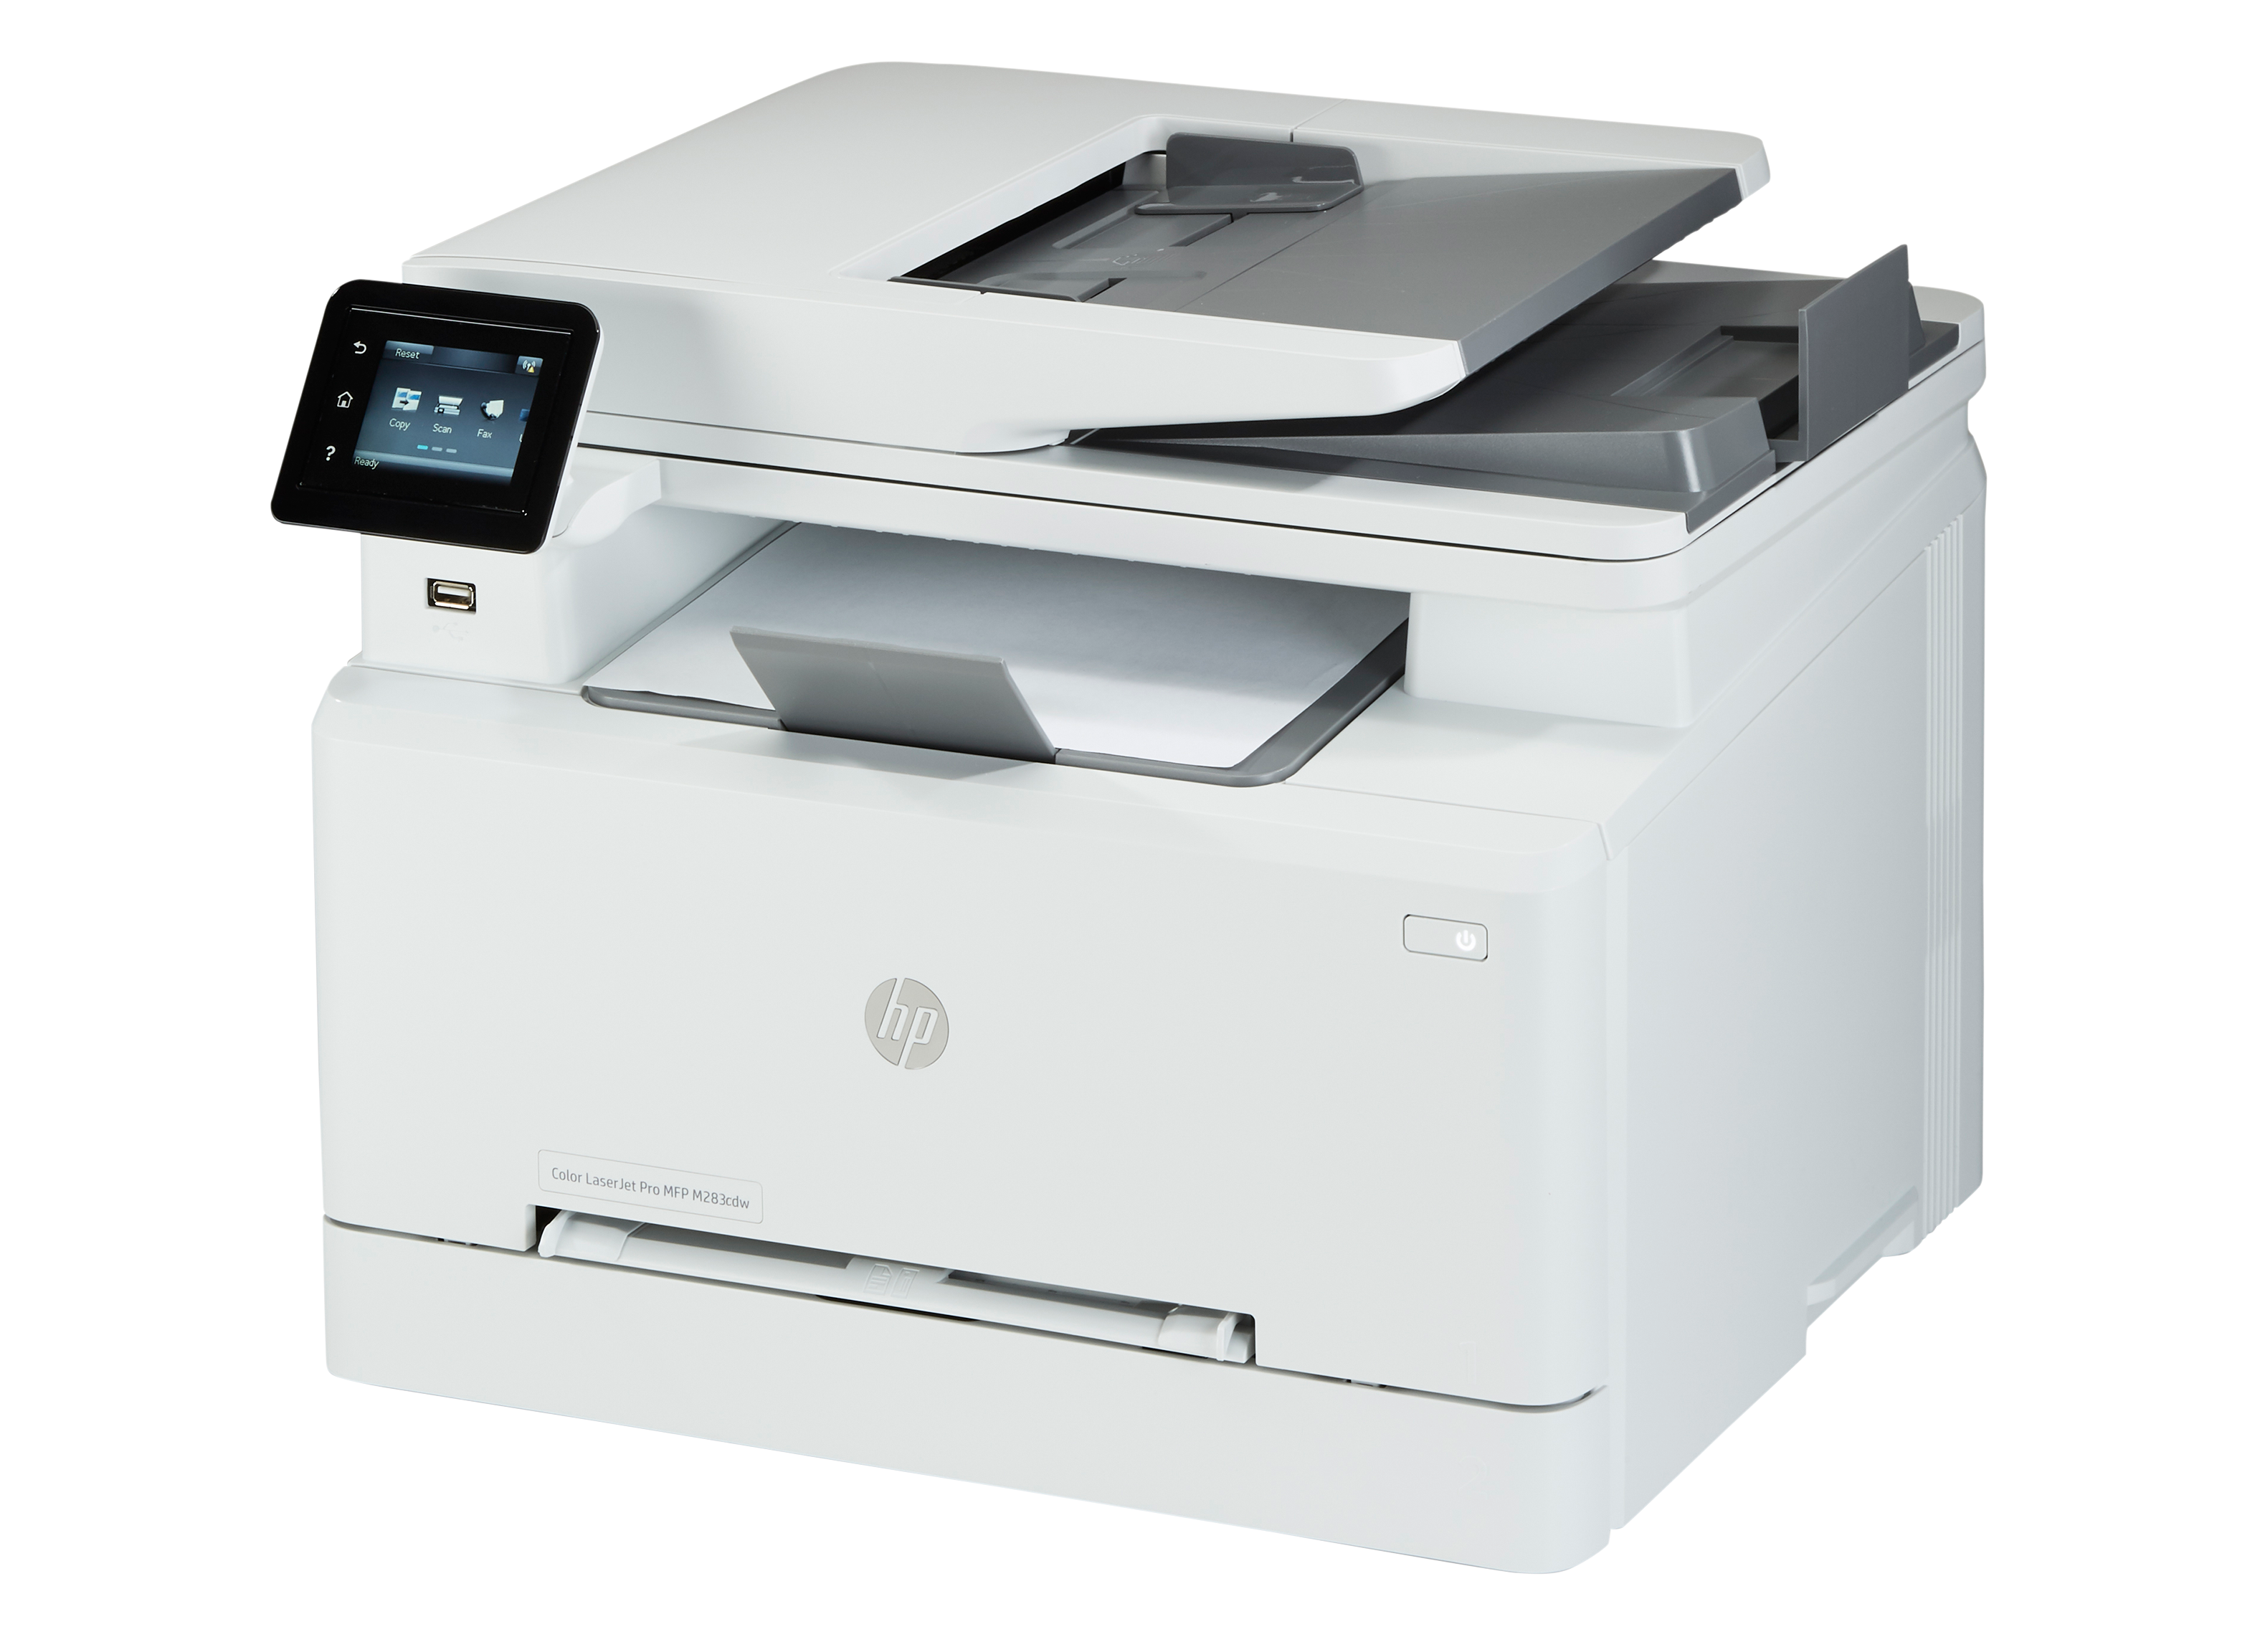 Color Pro MFP Printer Review Consumer Reports